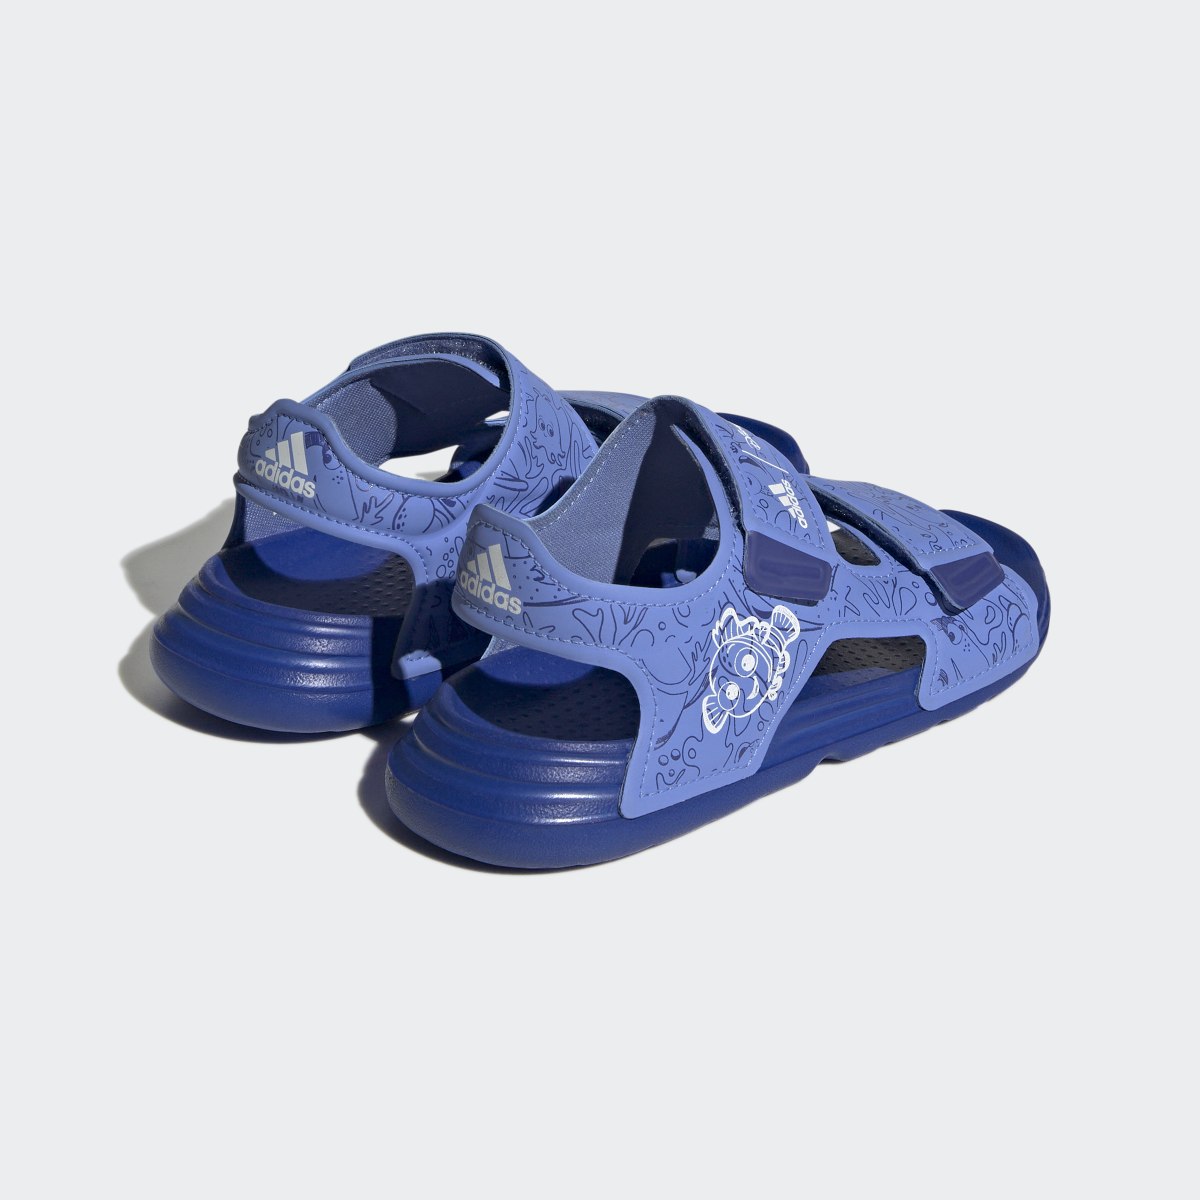 Adidas x Disney AltaSwim Finding Nemo Swim Sandals. 6